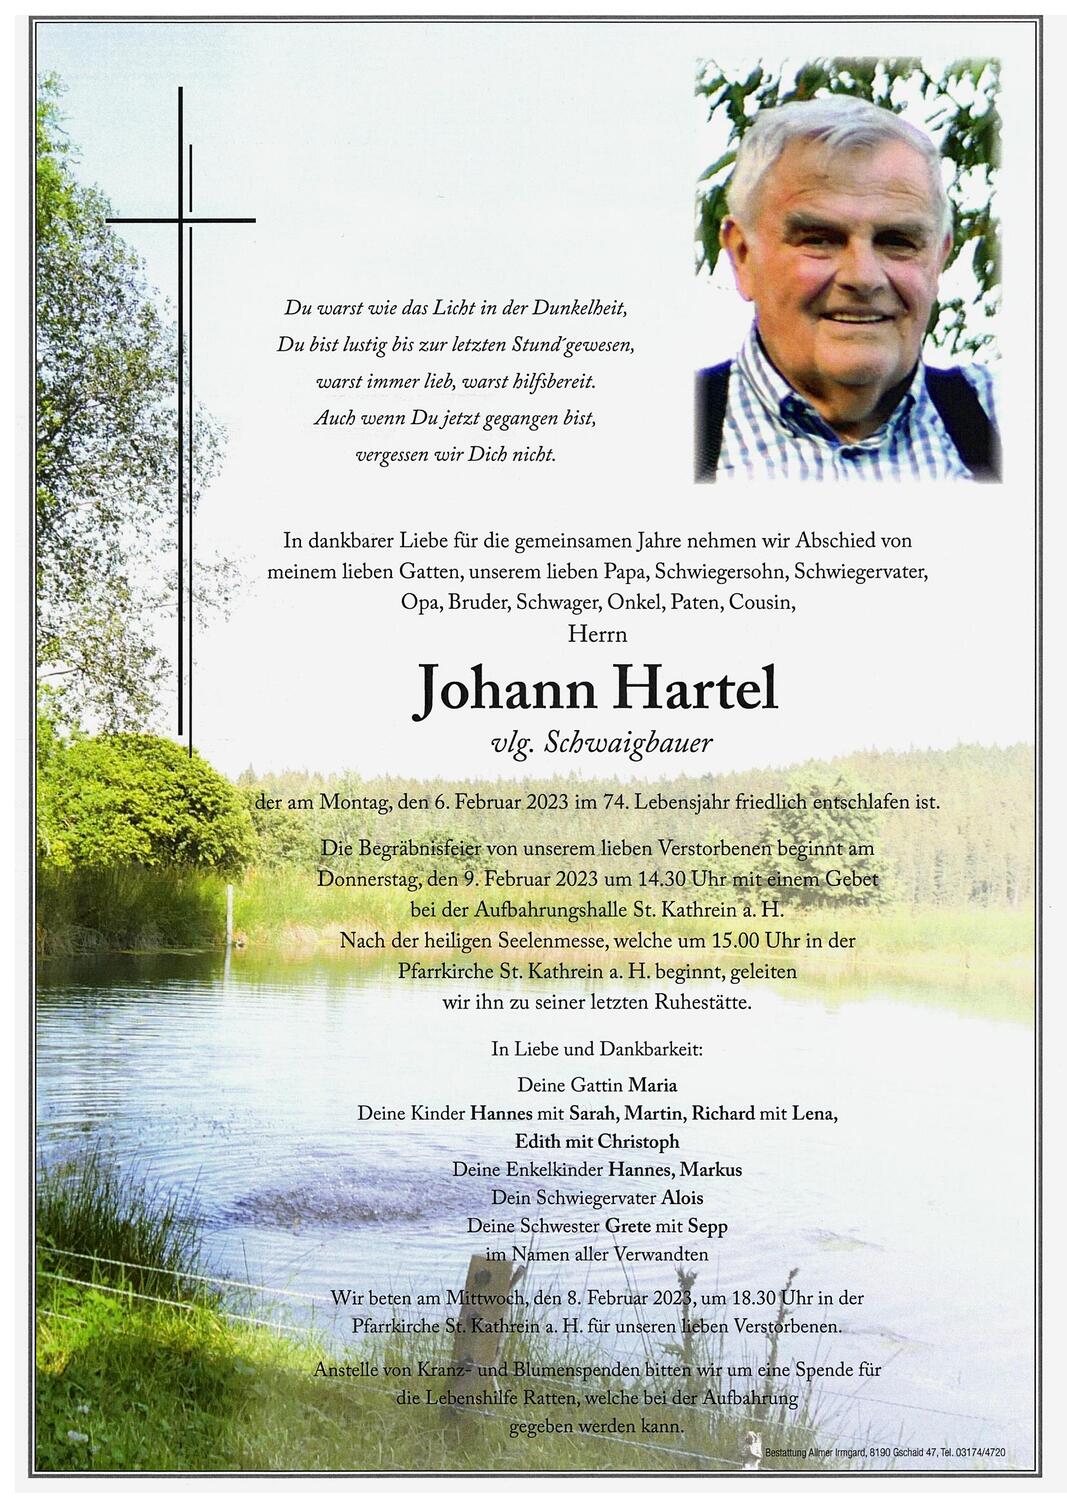 Johan Hartel